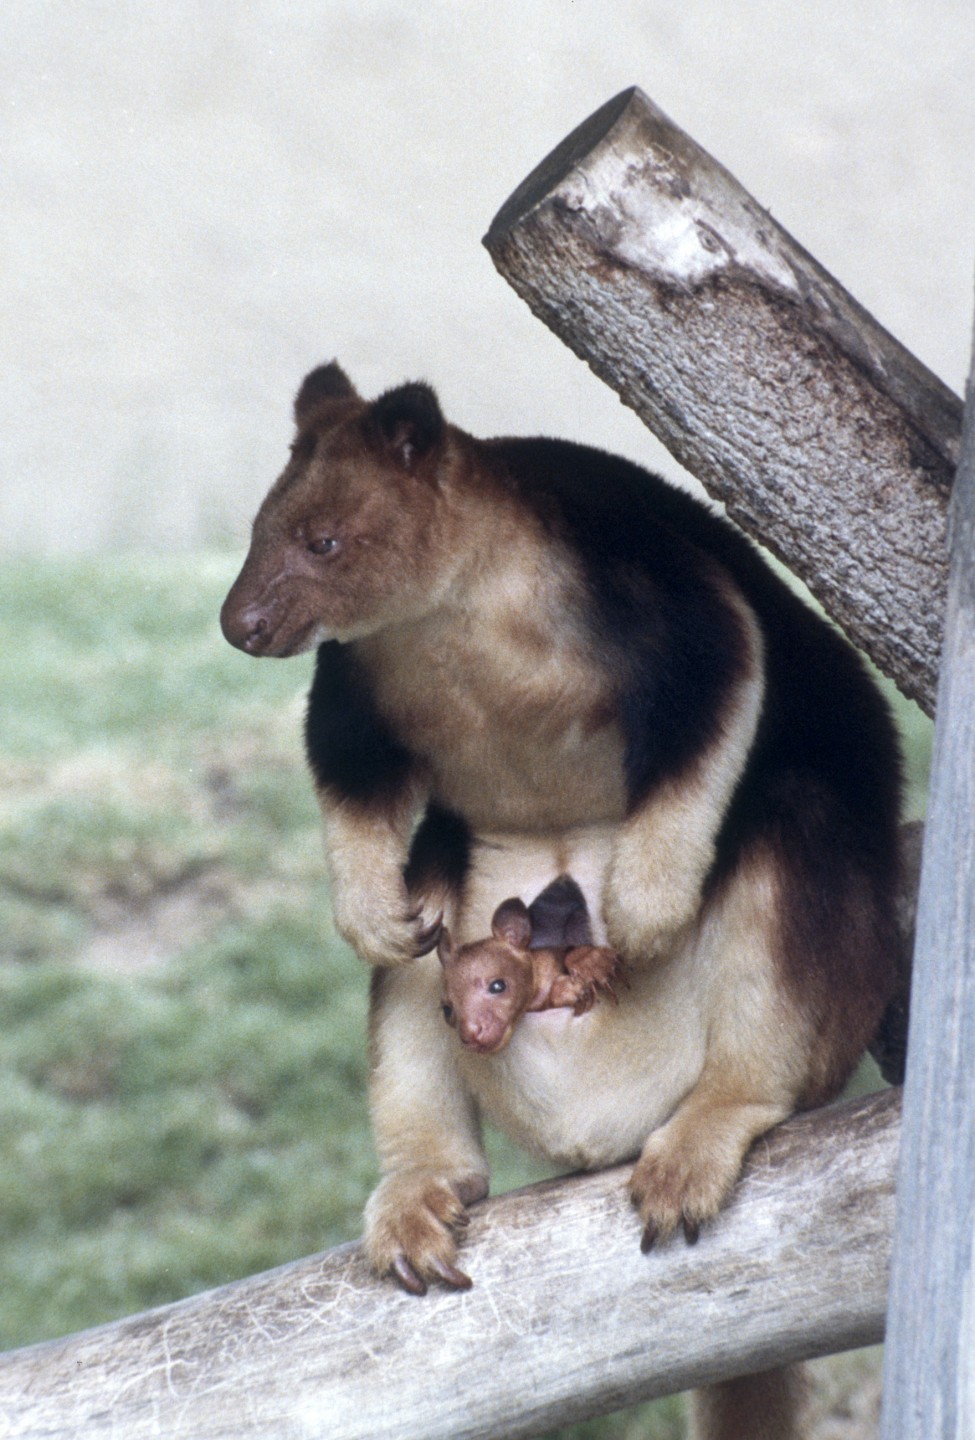 Goodfellow's tree kangaroo joey